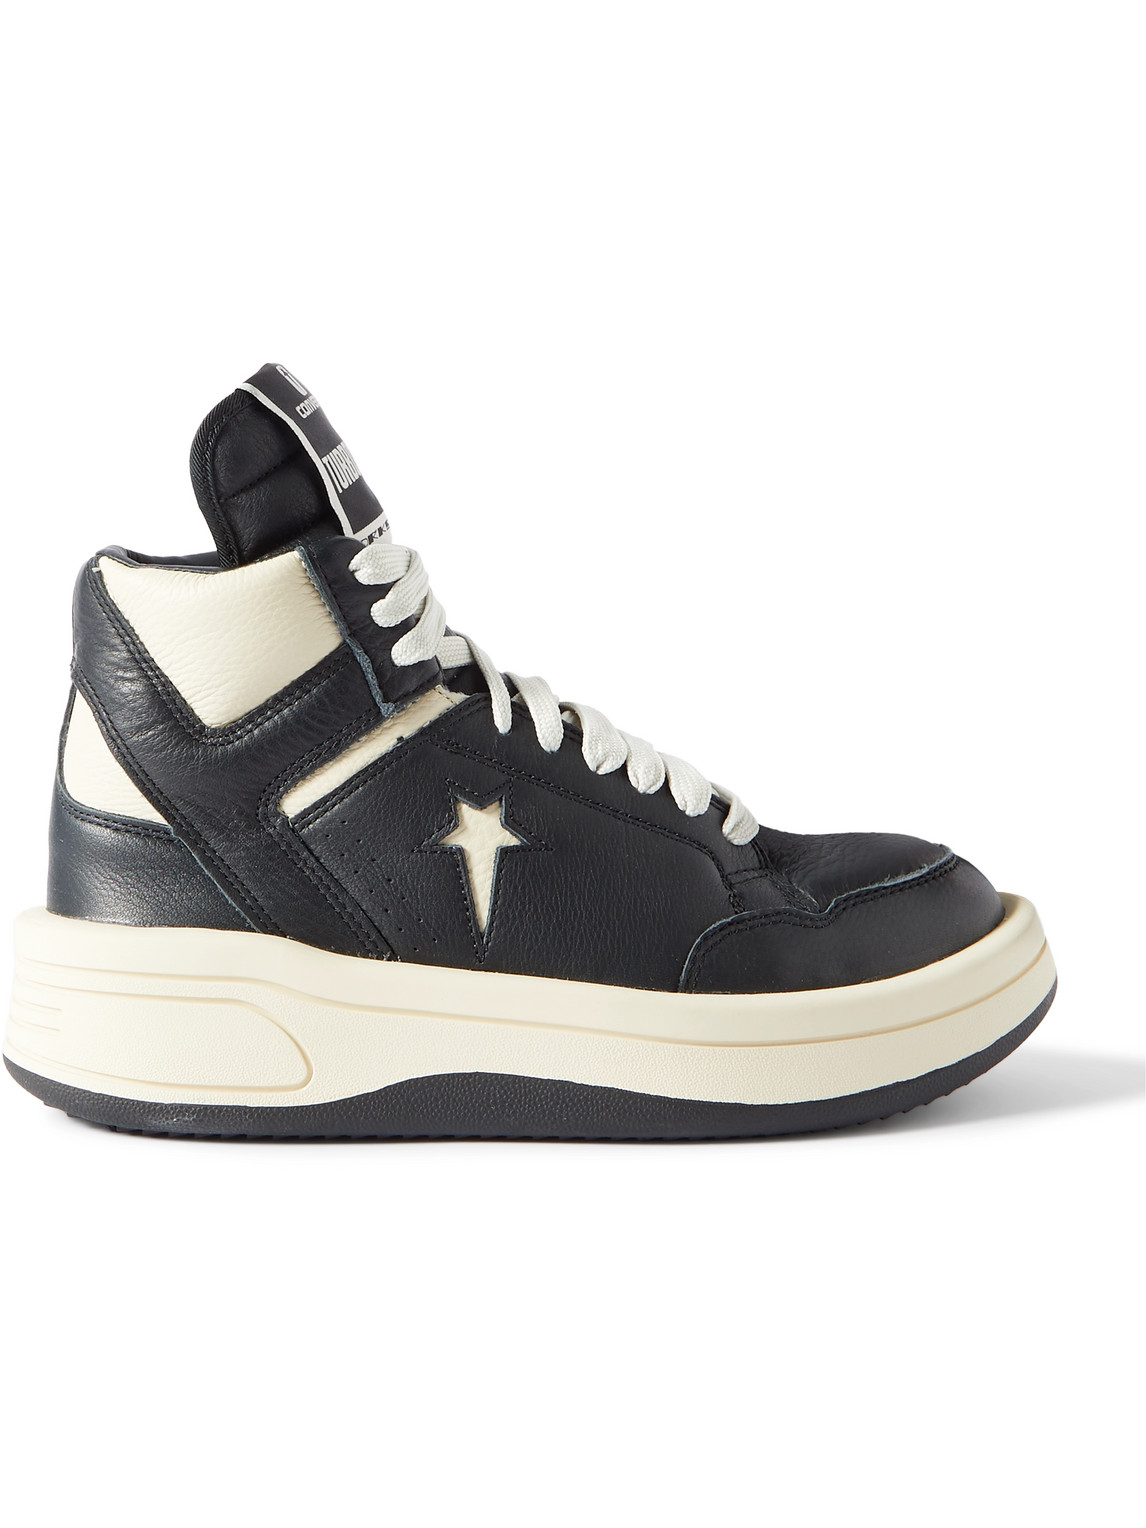 Rick Owens Converse Turbowpn Full-grain Leather High-top Sneakers In Black